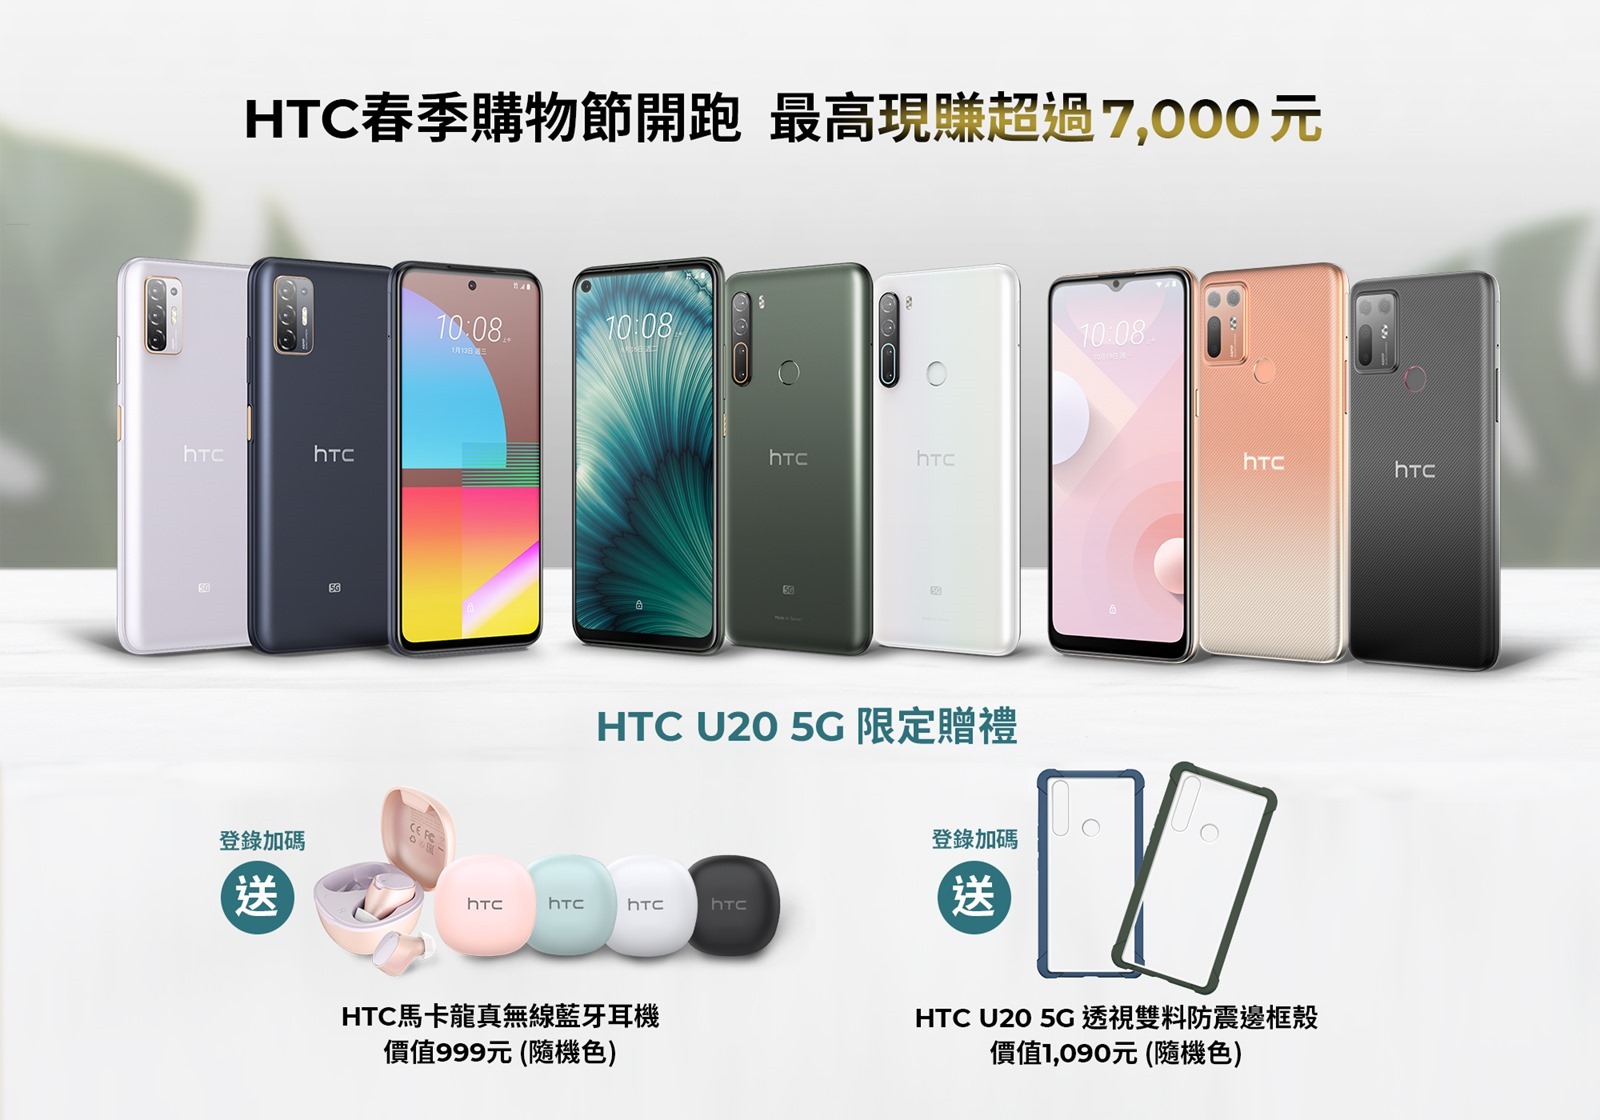 HTC 春季購物節開跑 4 月 1 日起 U20 5G 狂降 5,000 元 @3C 達人廖阿輝